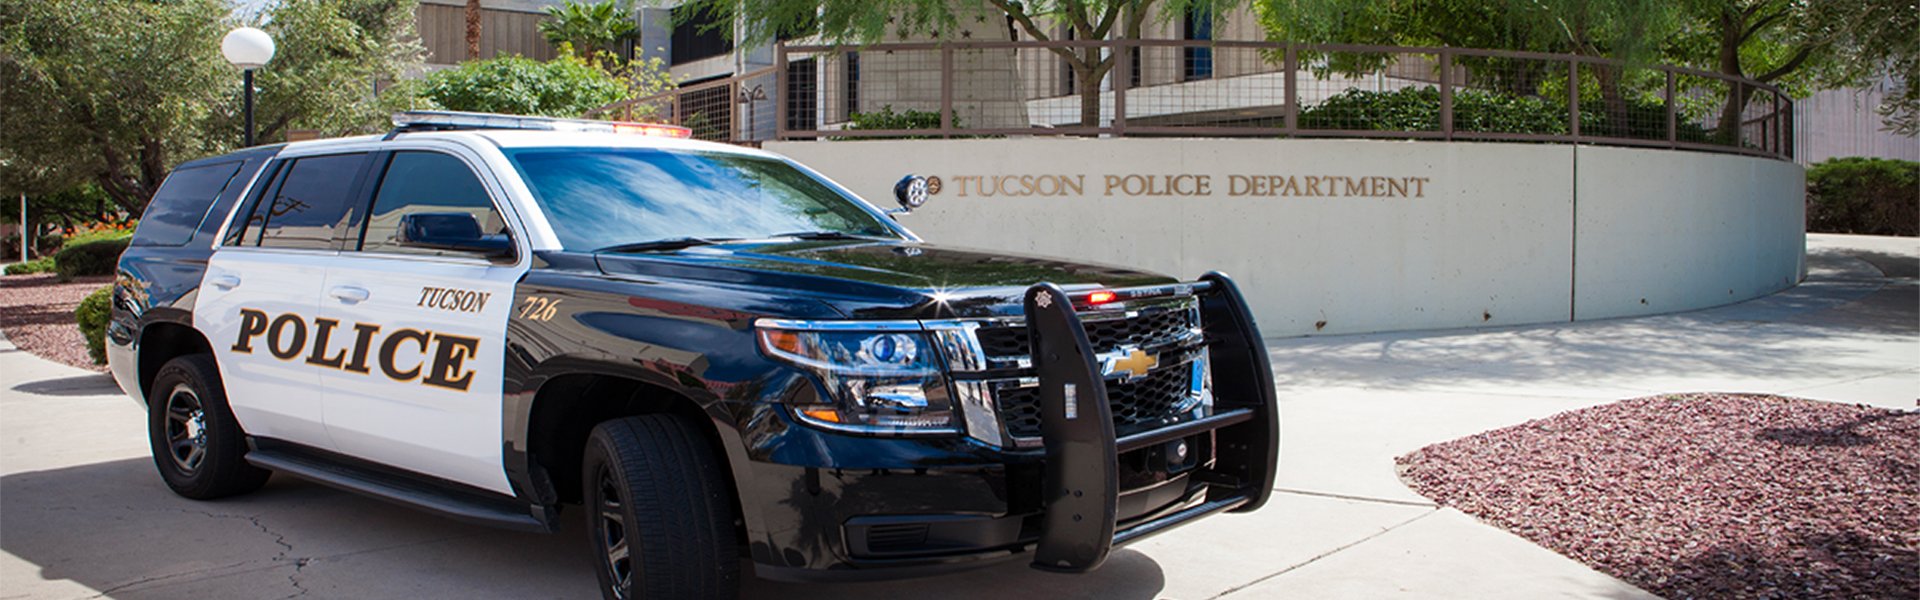 City of Tucson police vehicle.